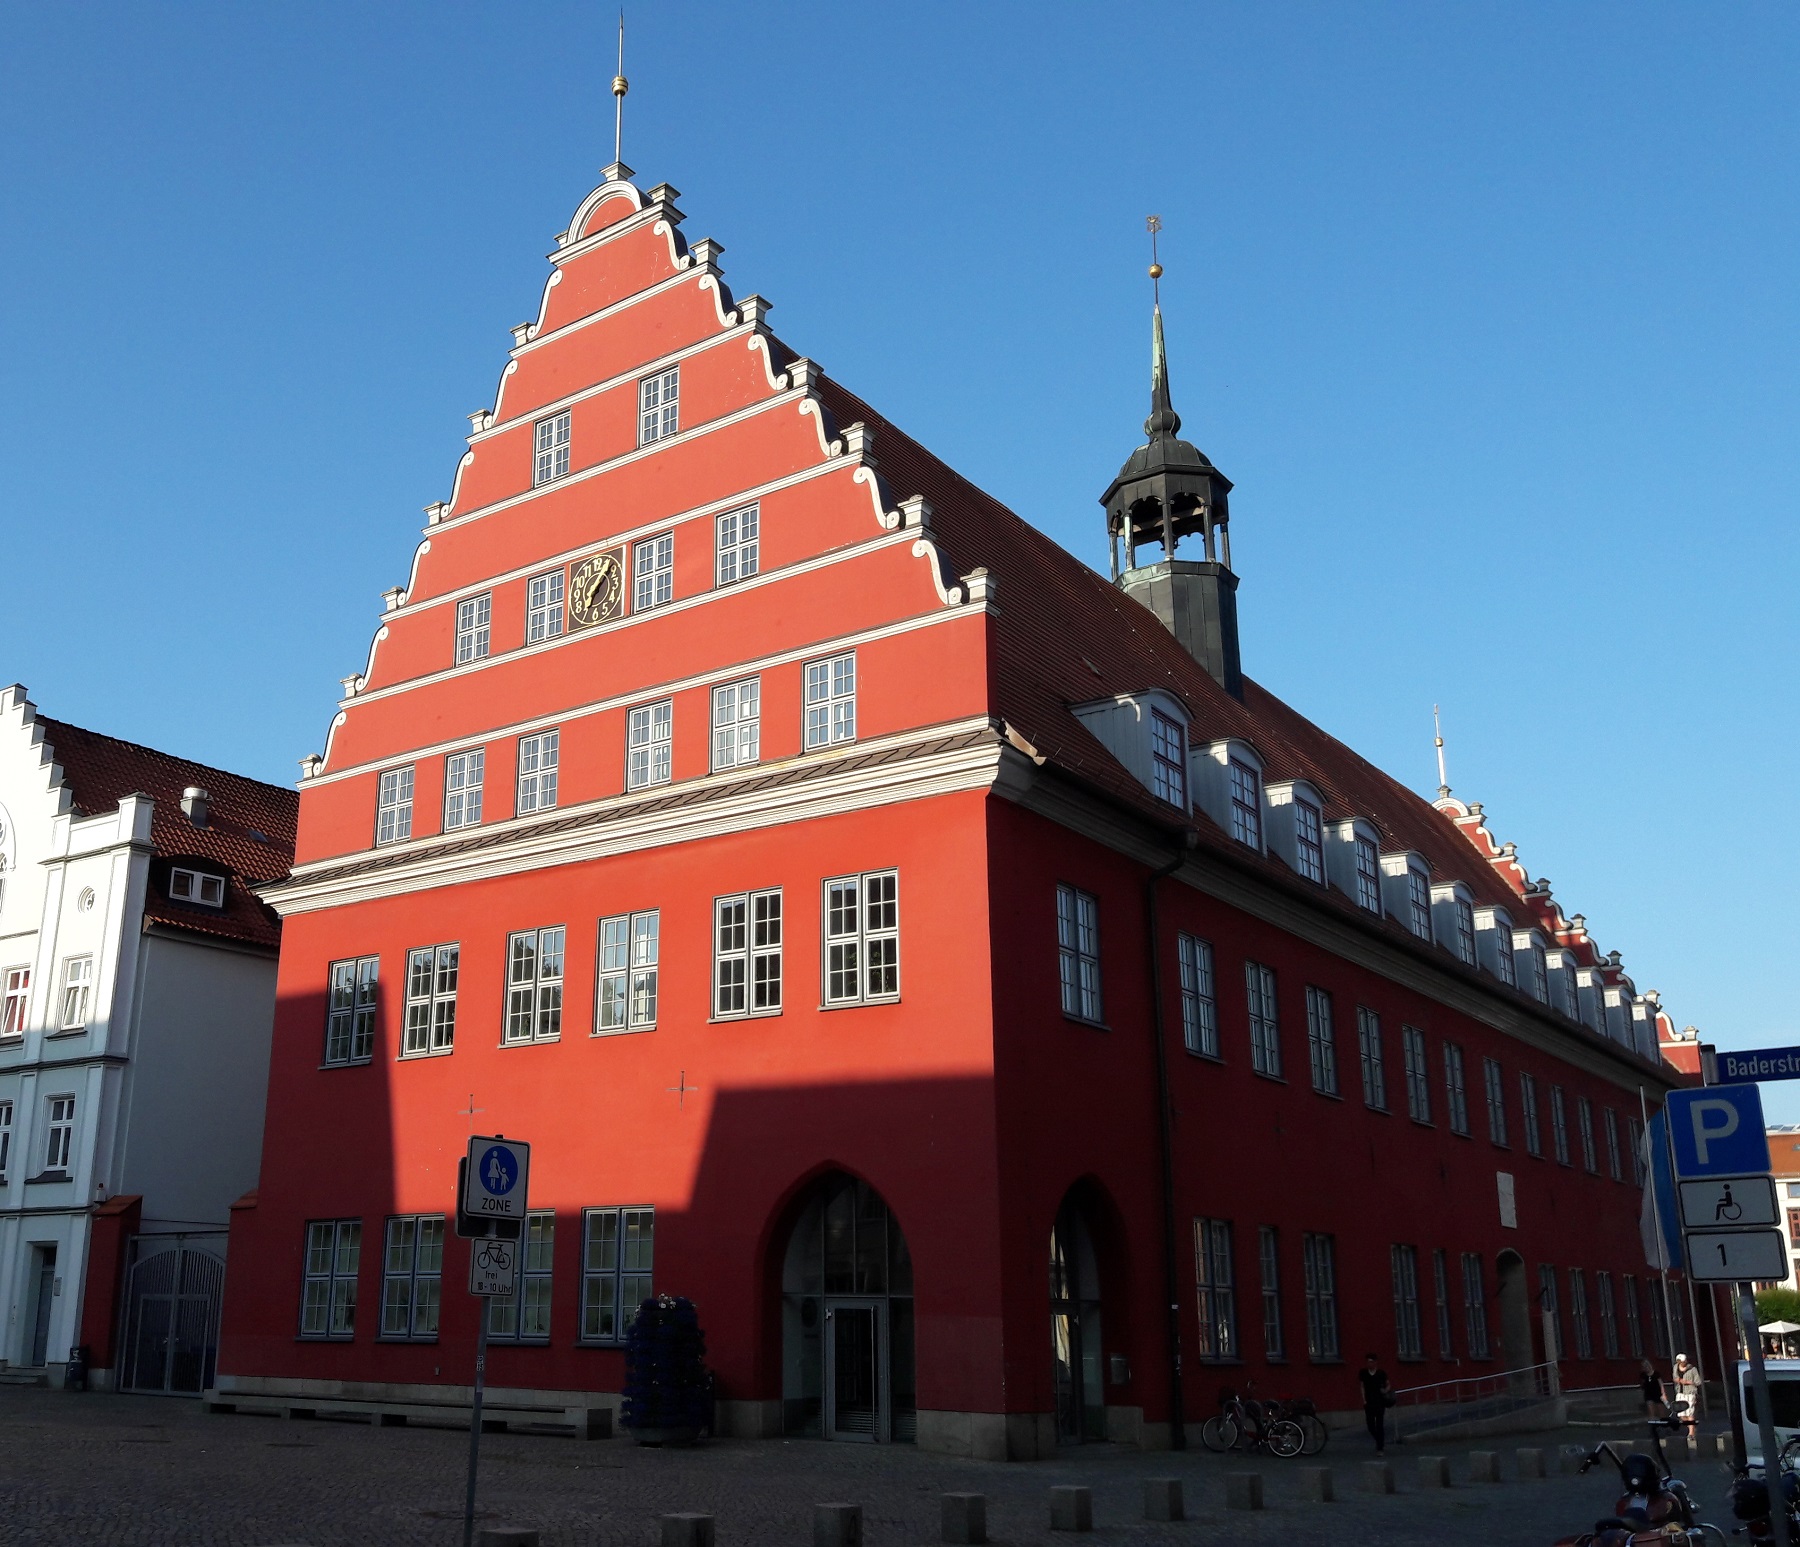 Greifswald Town Hall